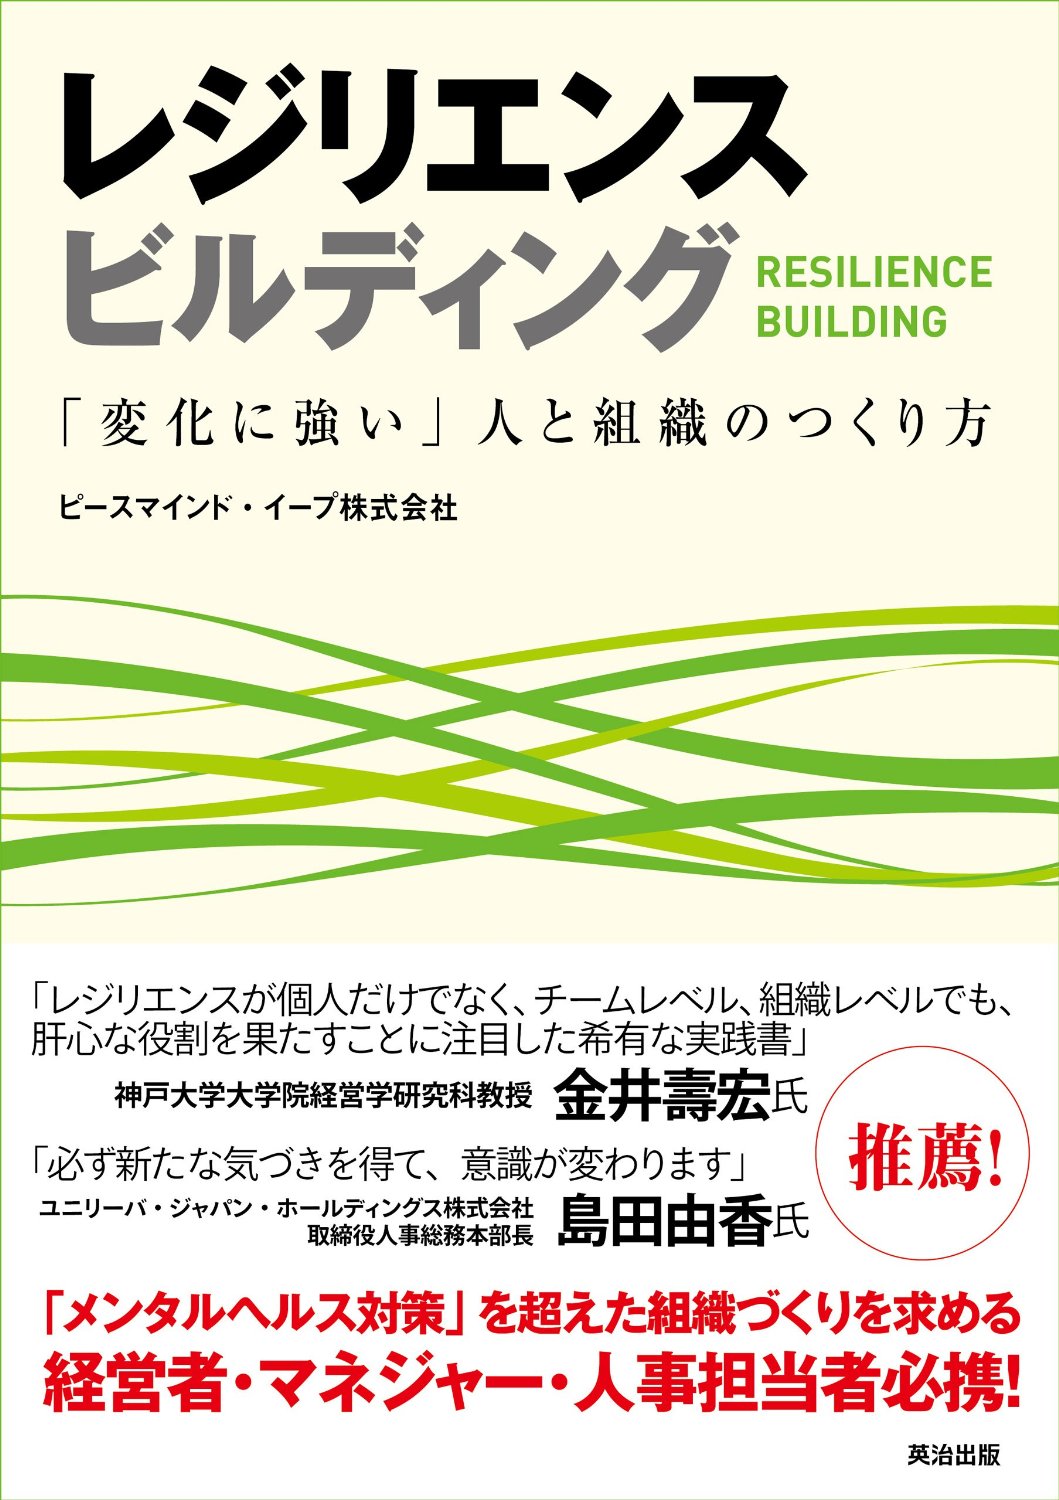 20151112_resilience building.jpg